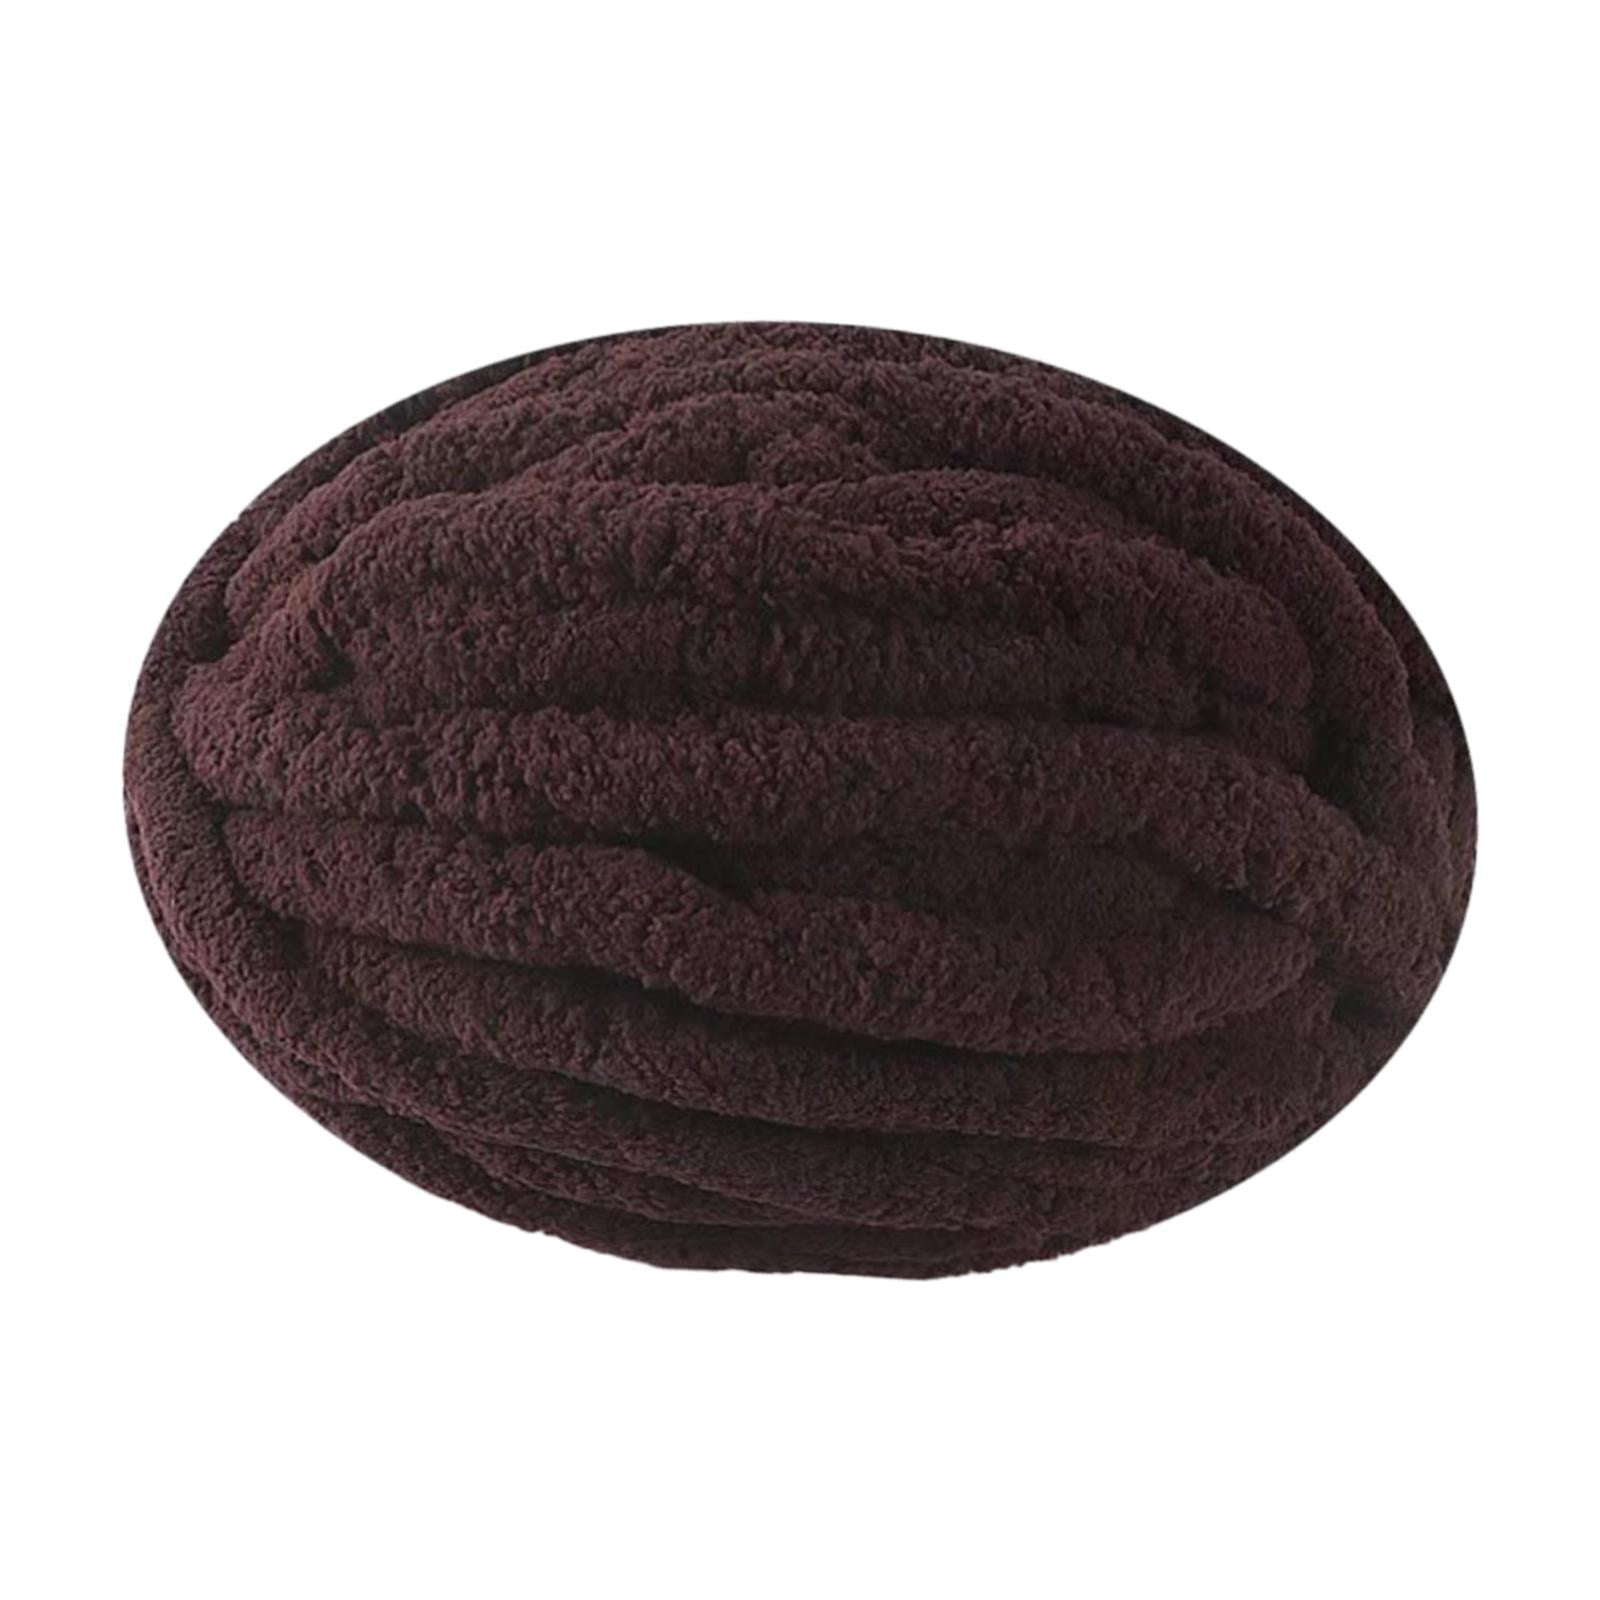 Chenille Chunky Yarn Arm Knitting Thick Bulky DIY for Knit Blanket Cushion Bed Sofa Home Decor (Light Green,250g/0.55 lb)/ 0.55 lb/24 Yards